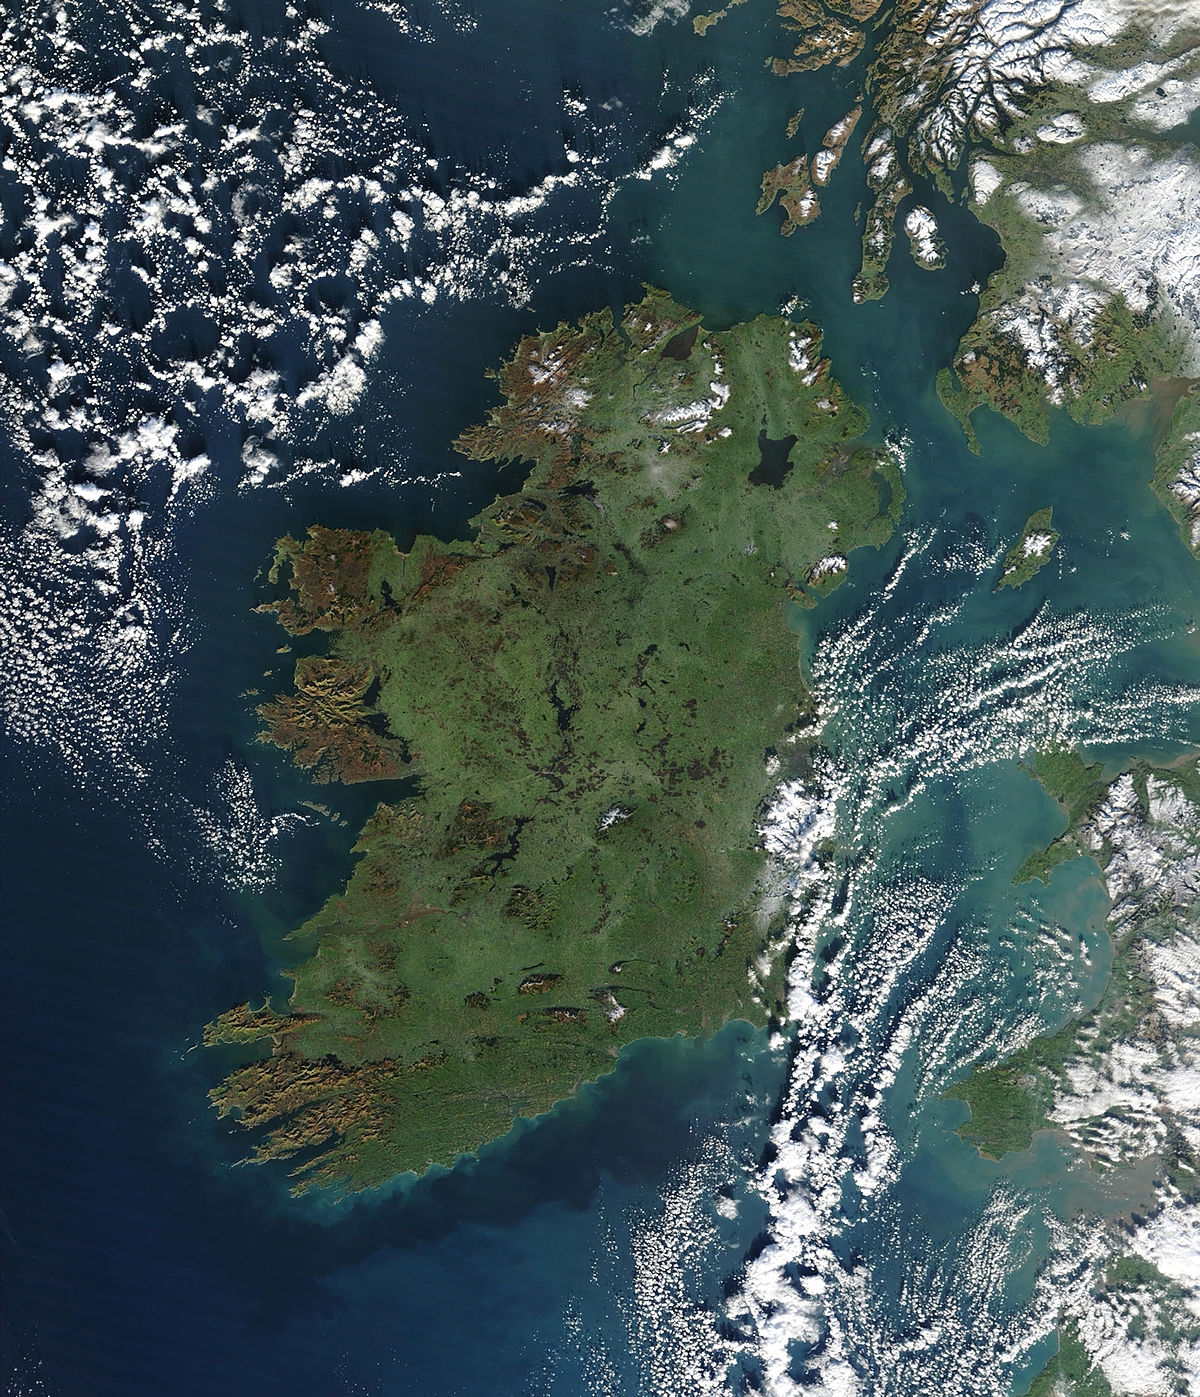 Irlanda (isla) - Wikipedia, la enciclopedia libre